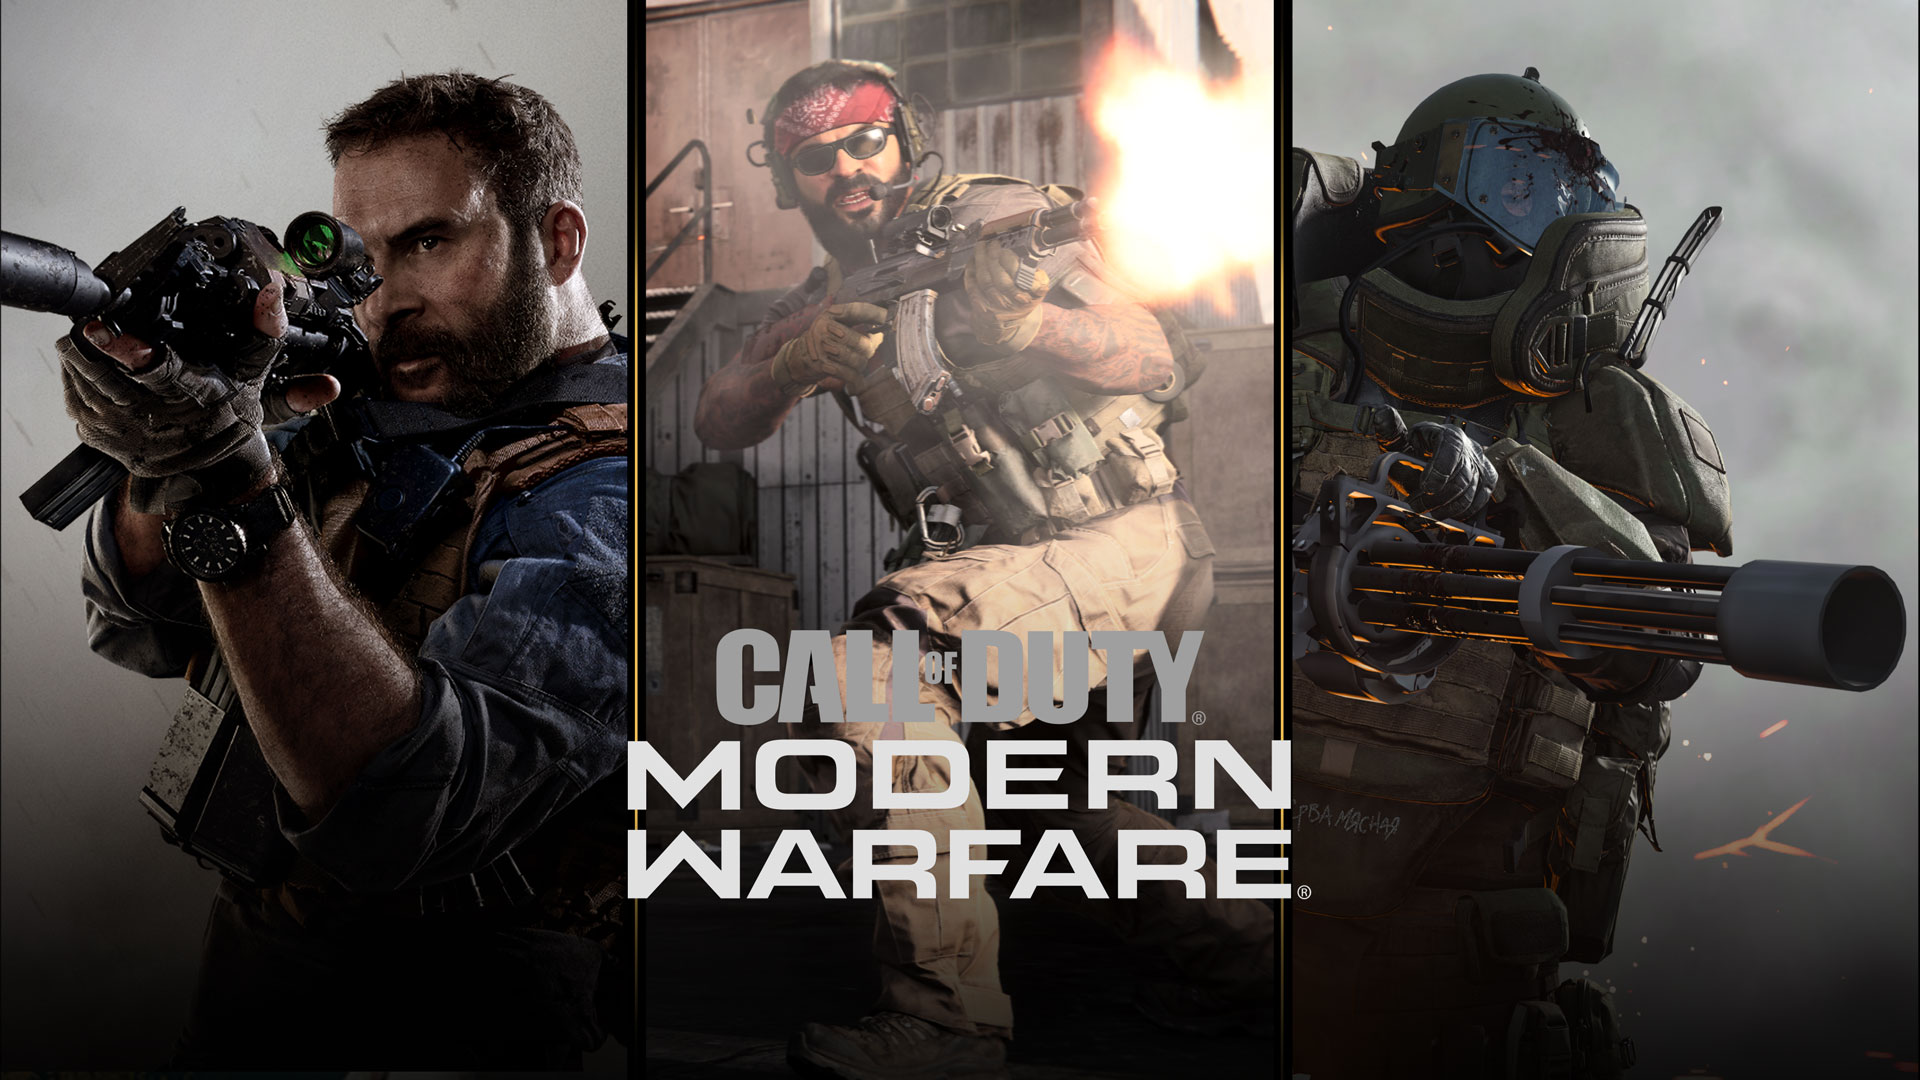 Announcing Call of Duty®: Modern Warfare®